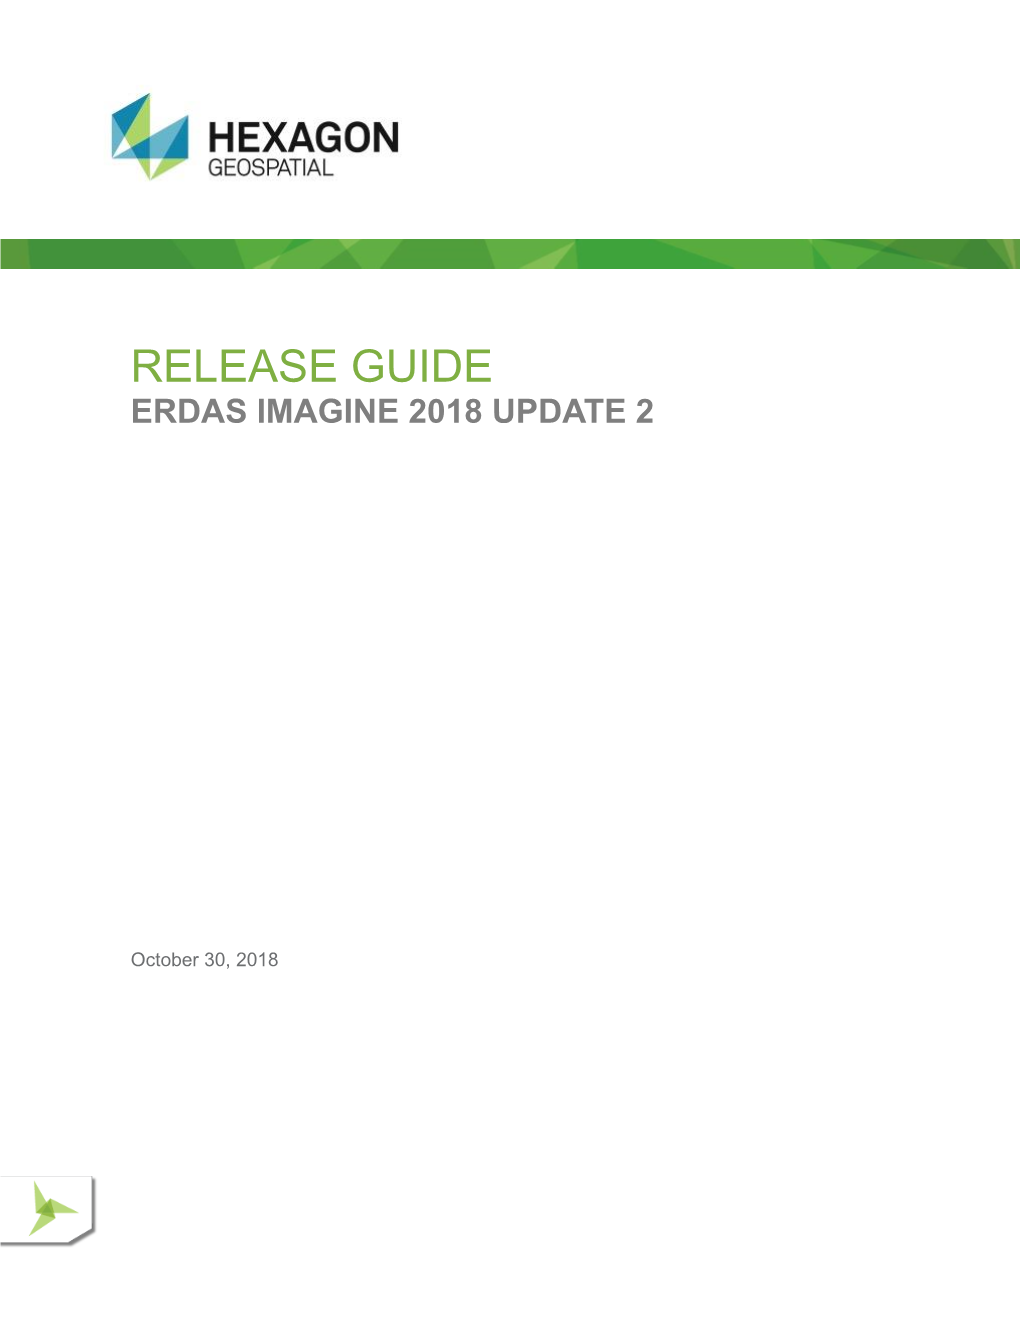 Release Guide for ERDAS IMAGINE 2018 Update 2